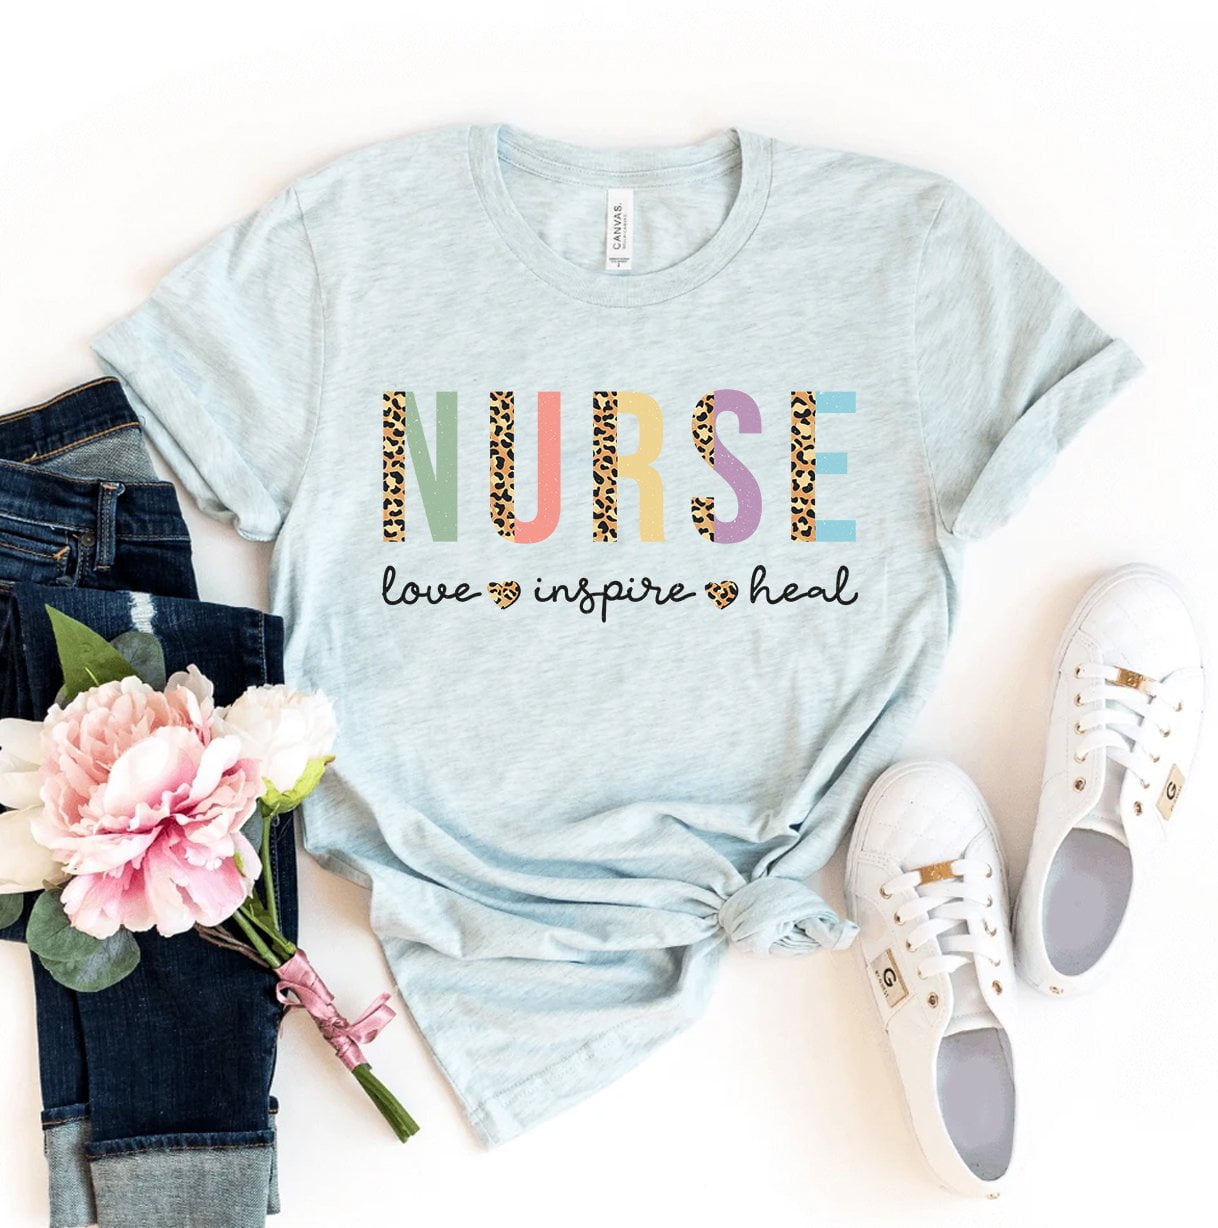 RN Shirts Nurse Life Shirt Nurse Week Shirt Registered Nurse Shirt Nursing School Nursing CNA Shirt Nurse Deep Health All Star Shirt